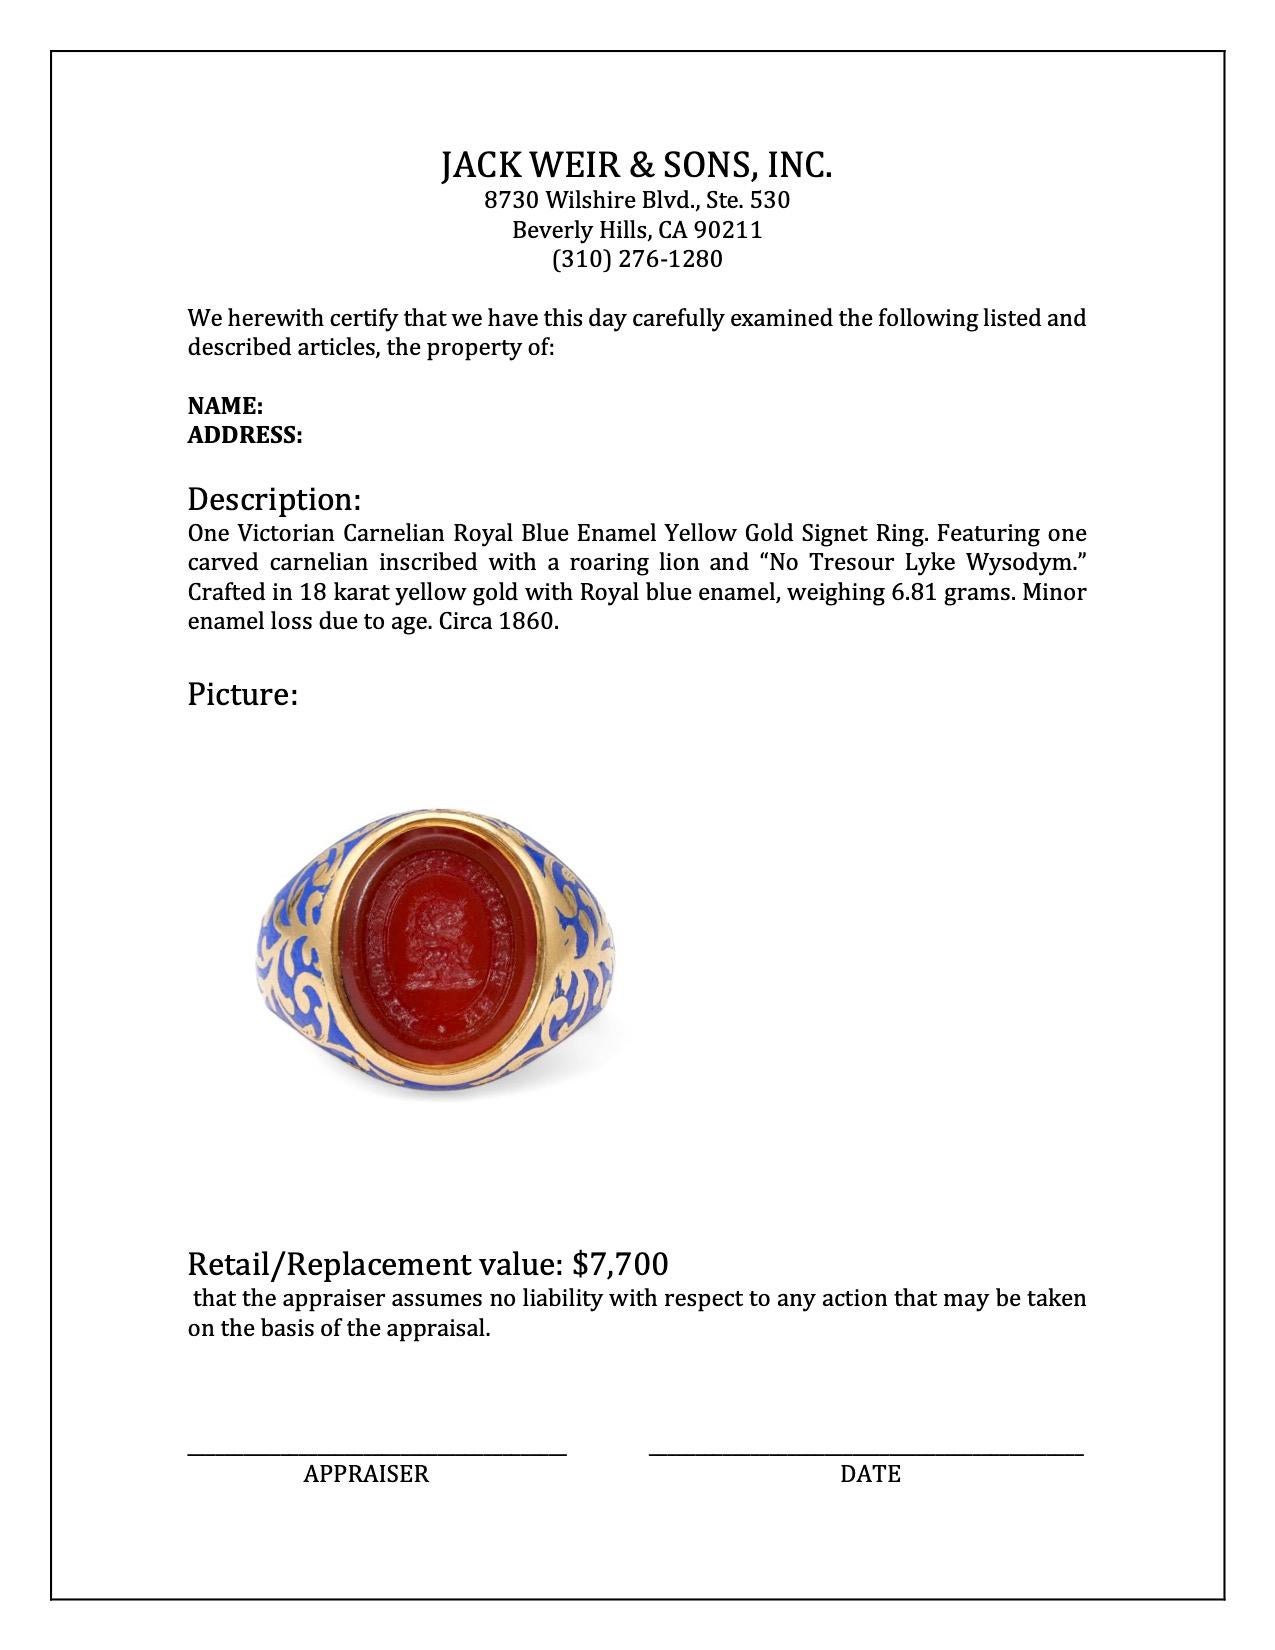 Women's or Men's Victorian Carnelian Royal Blue Enamel Yellow Gold Signet Ring For Sale